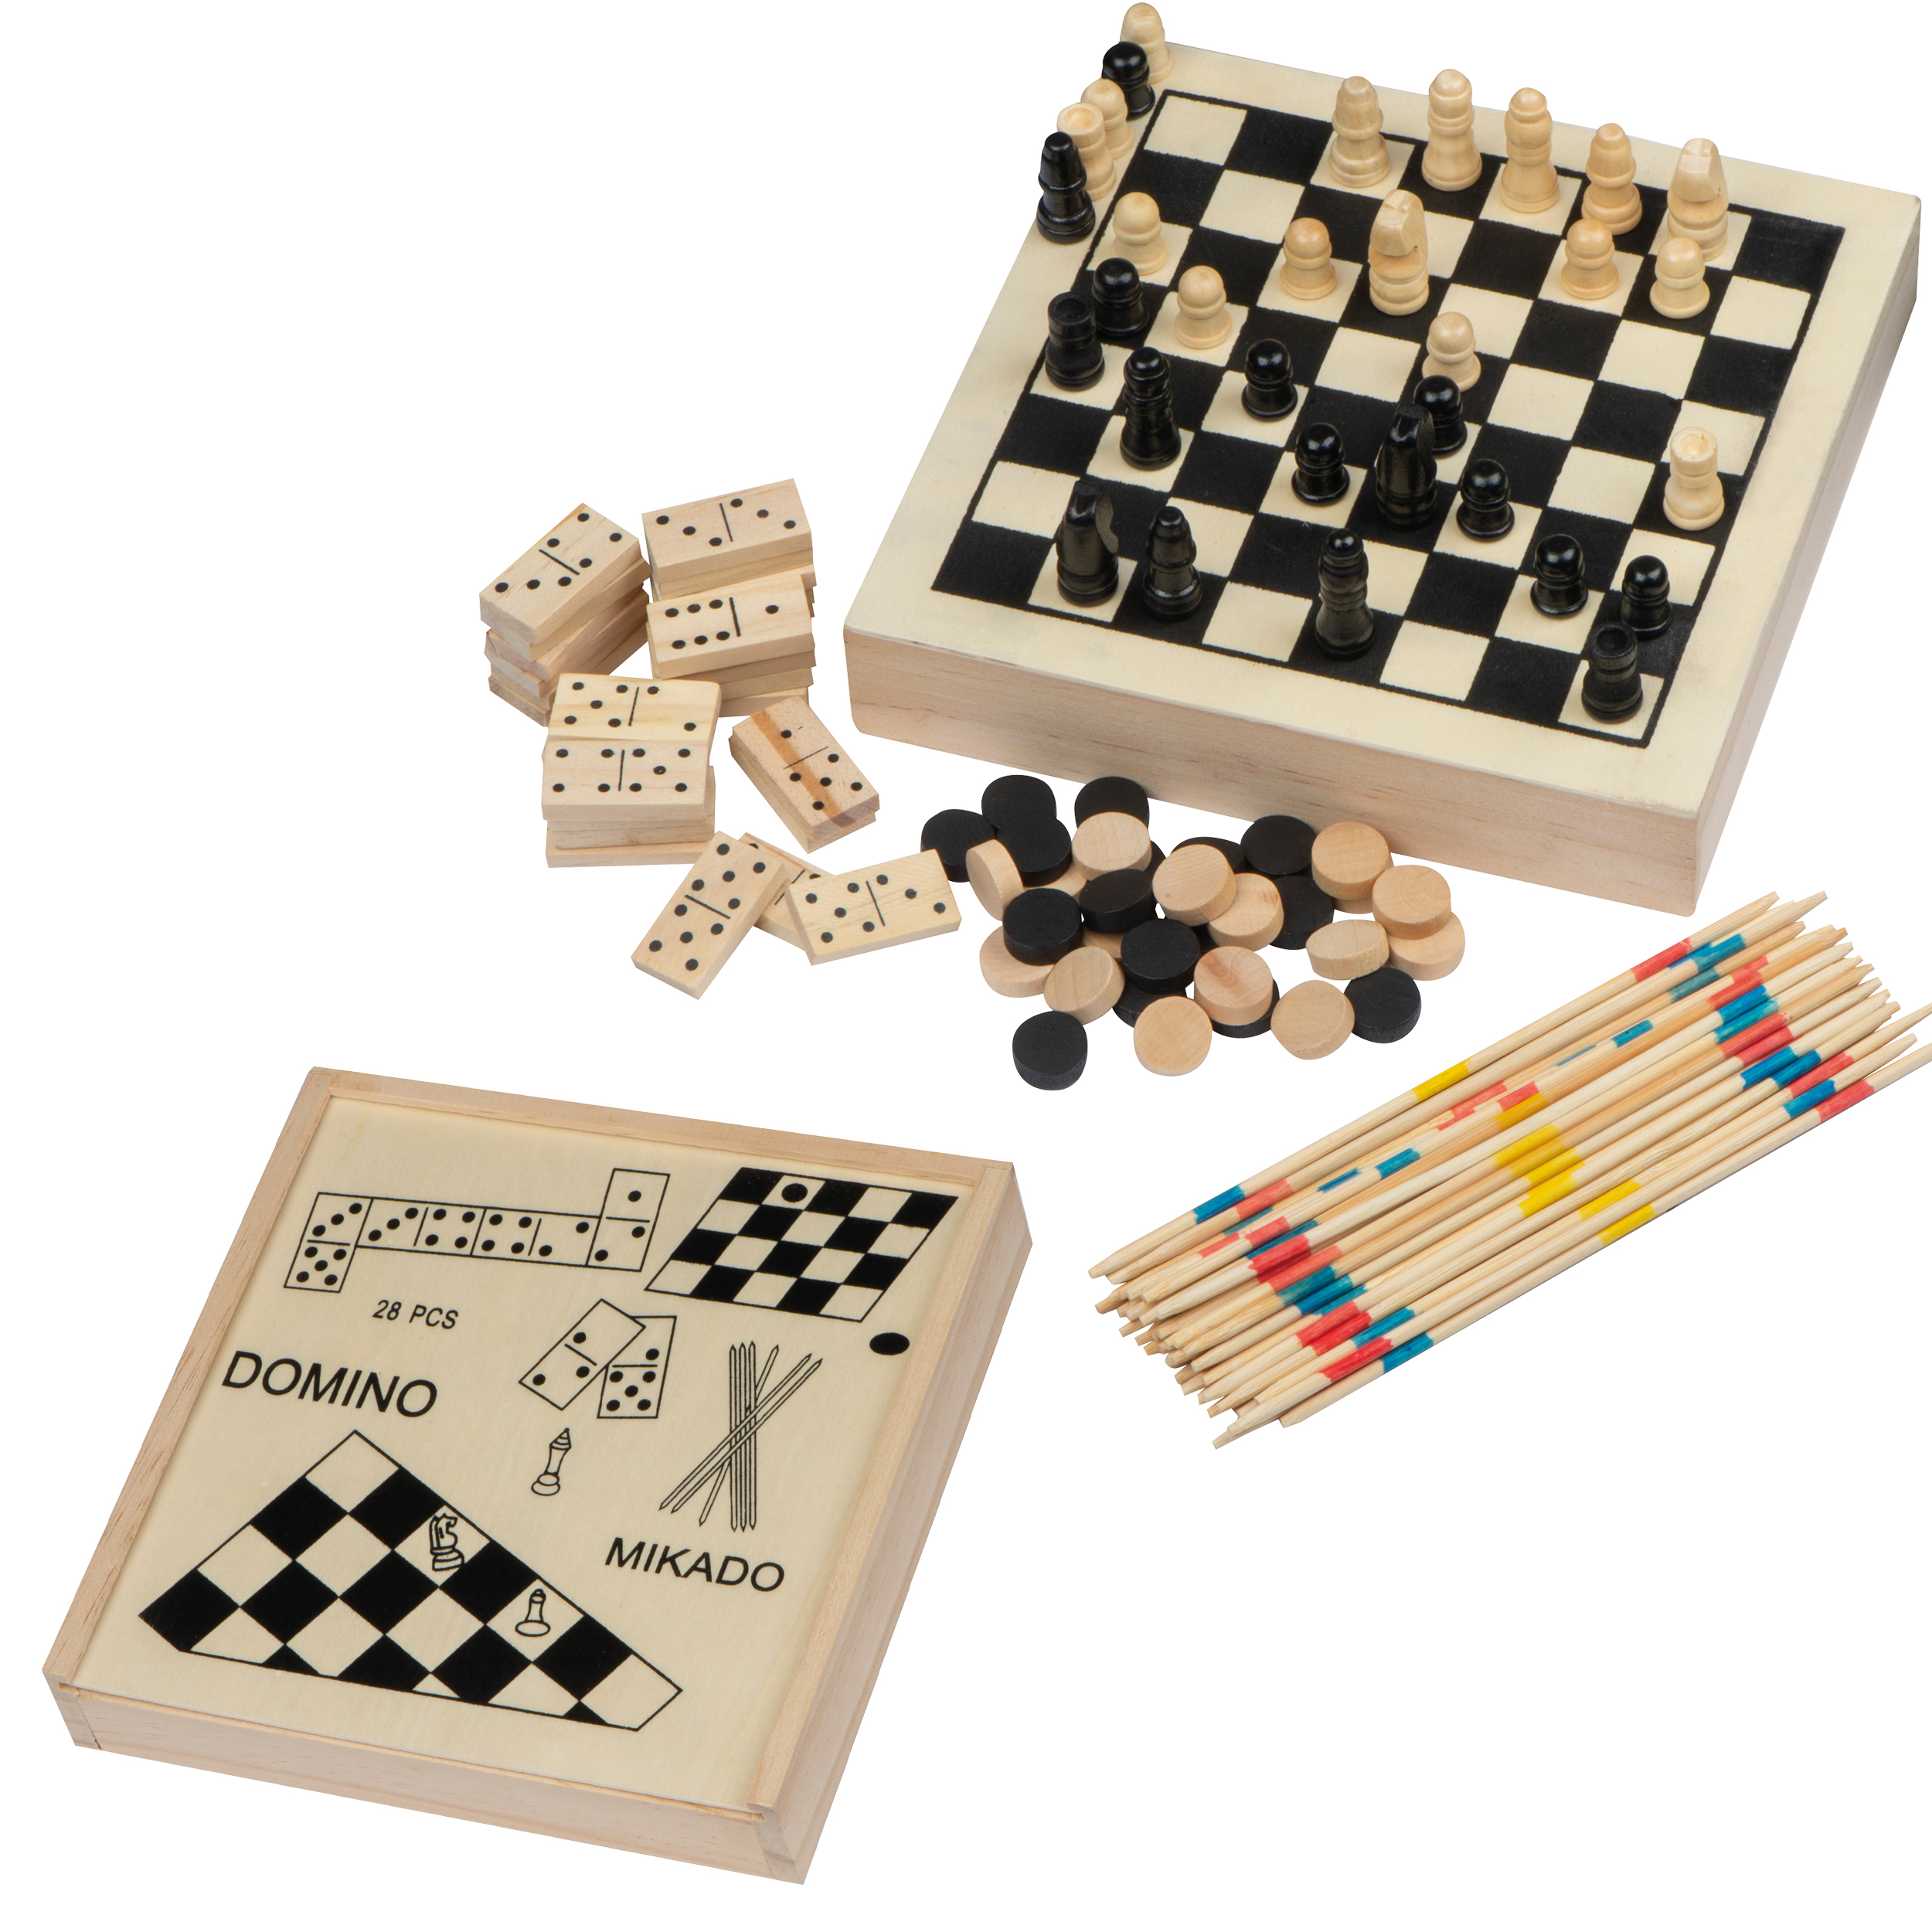 Wooden game set